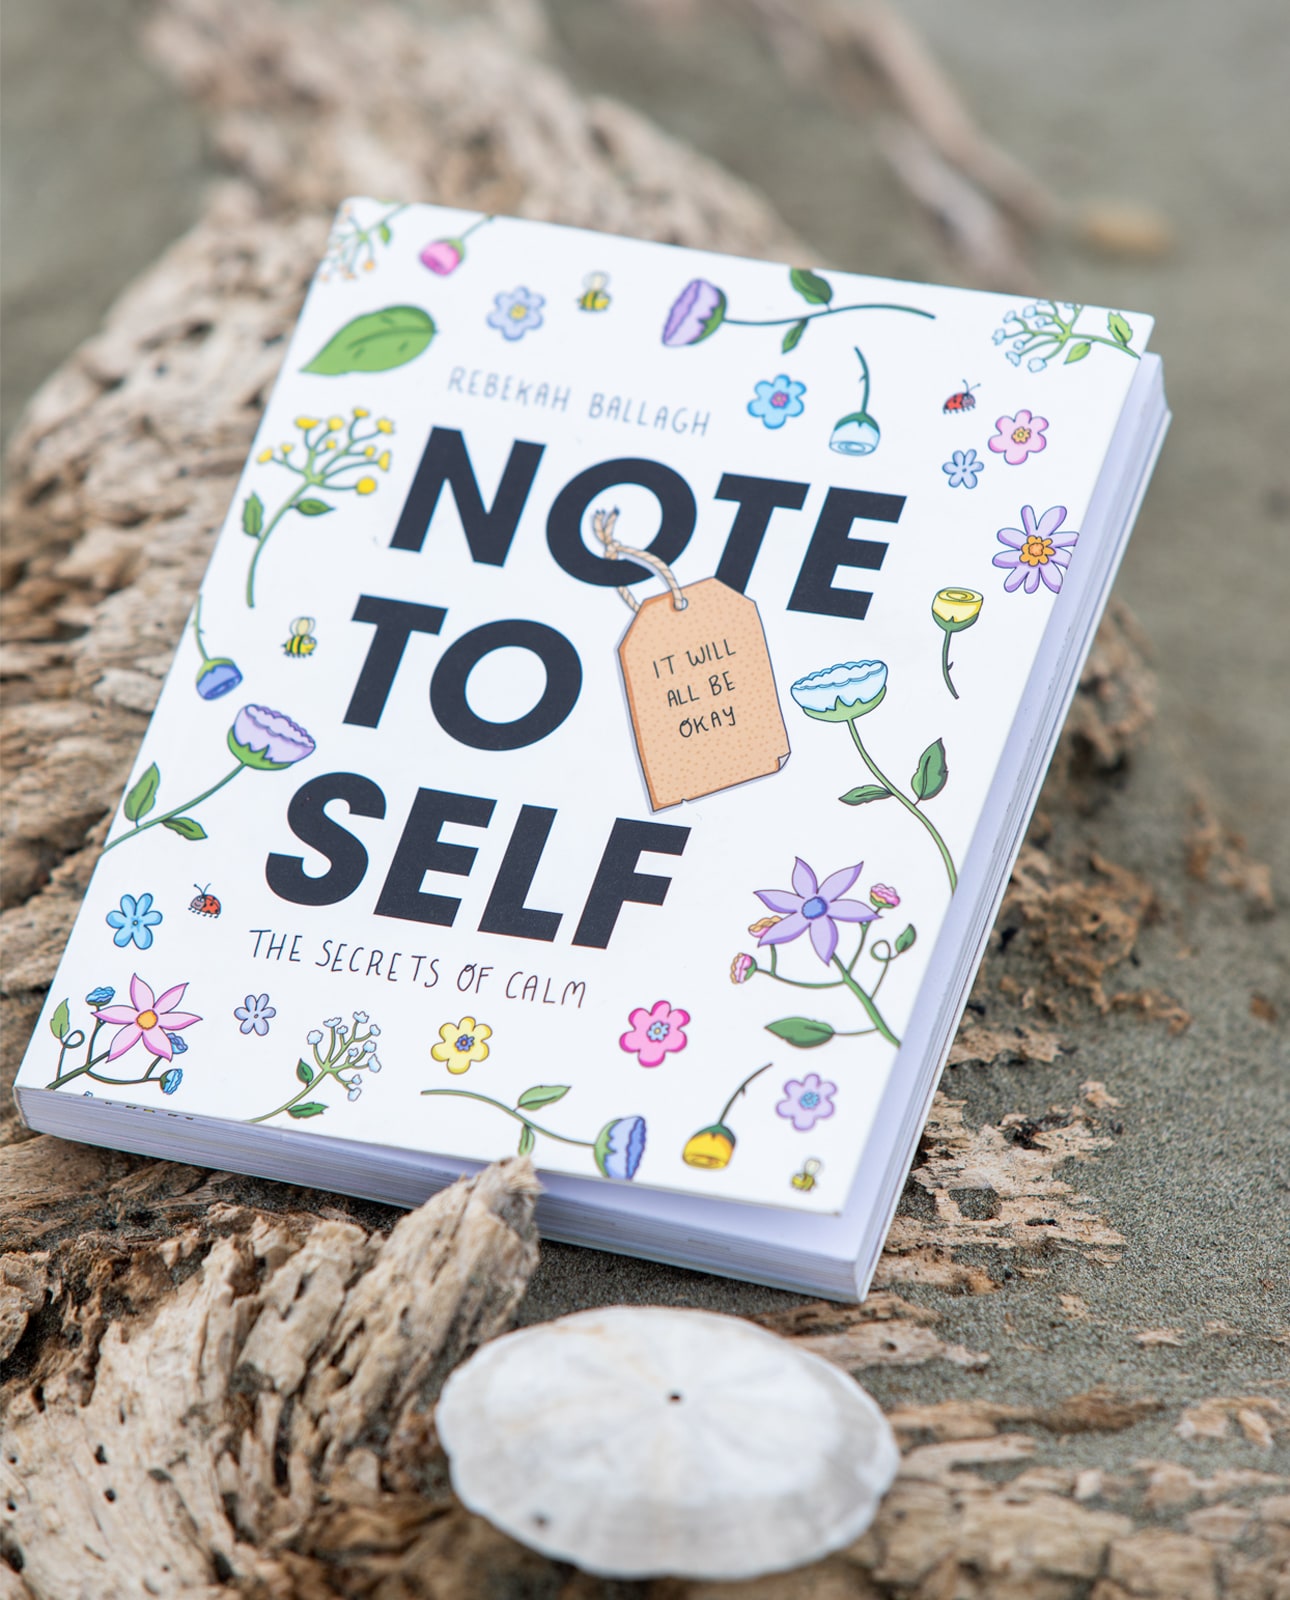 Note to Self: The Secrets of Calm by Rebecca Ballagh 